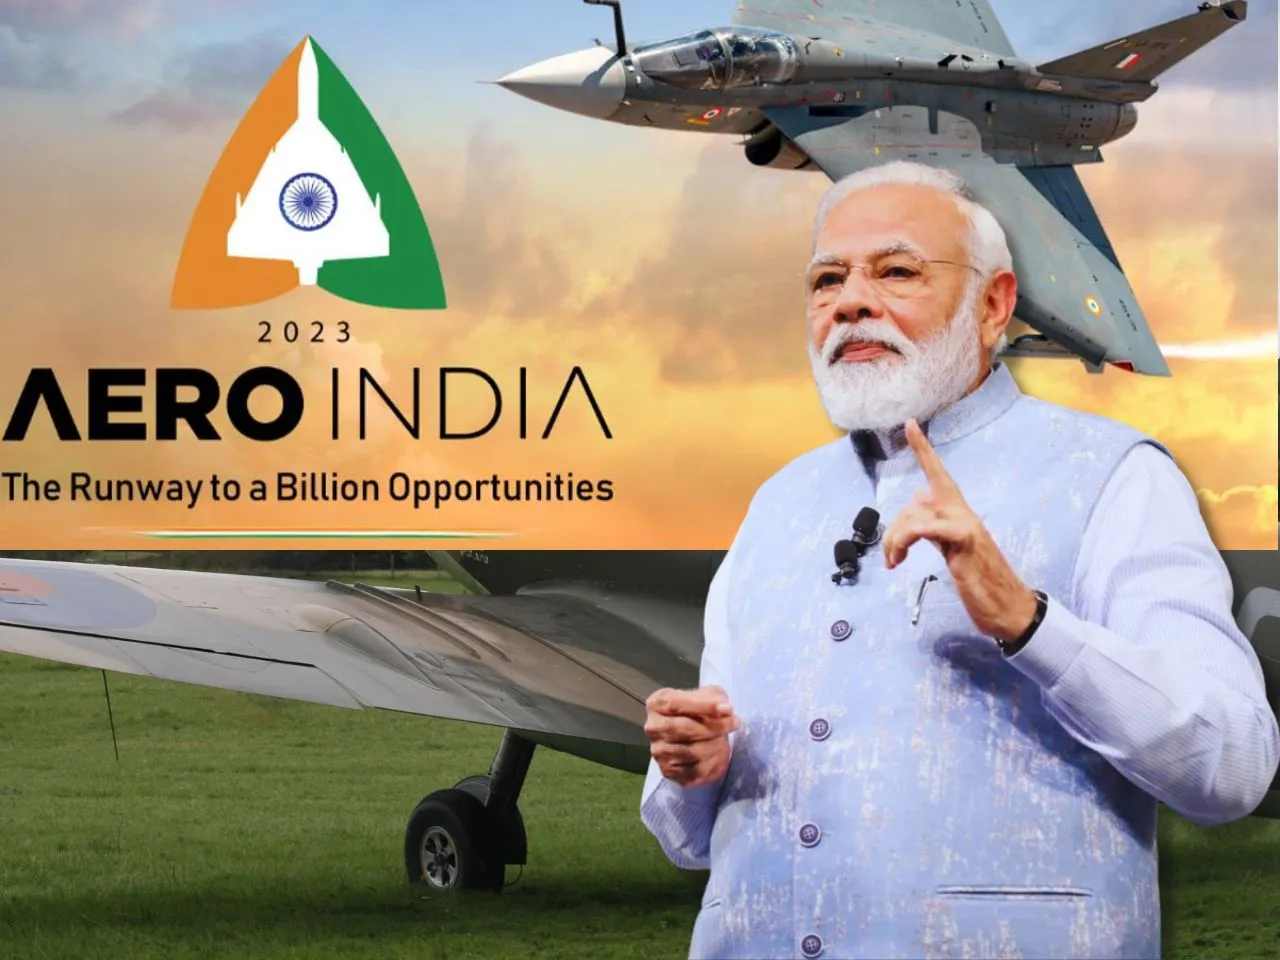 Aero India 2023 Reflects ‘Make in India, Make for the World' Spirit